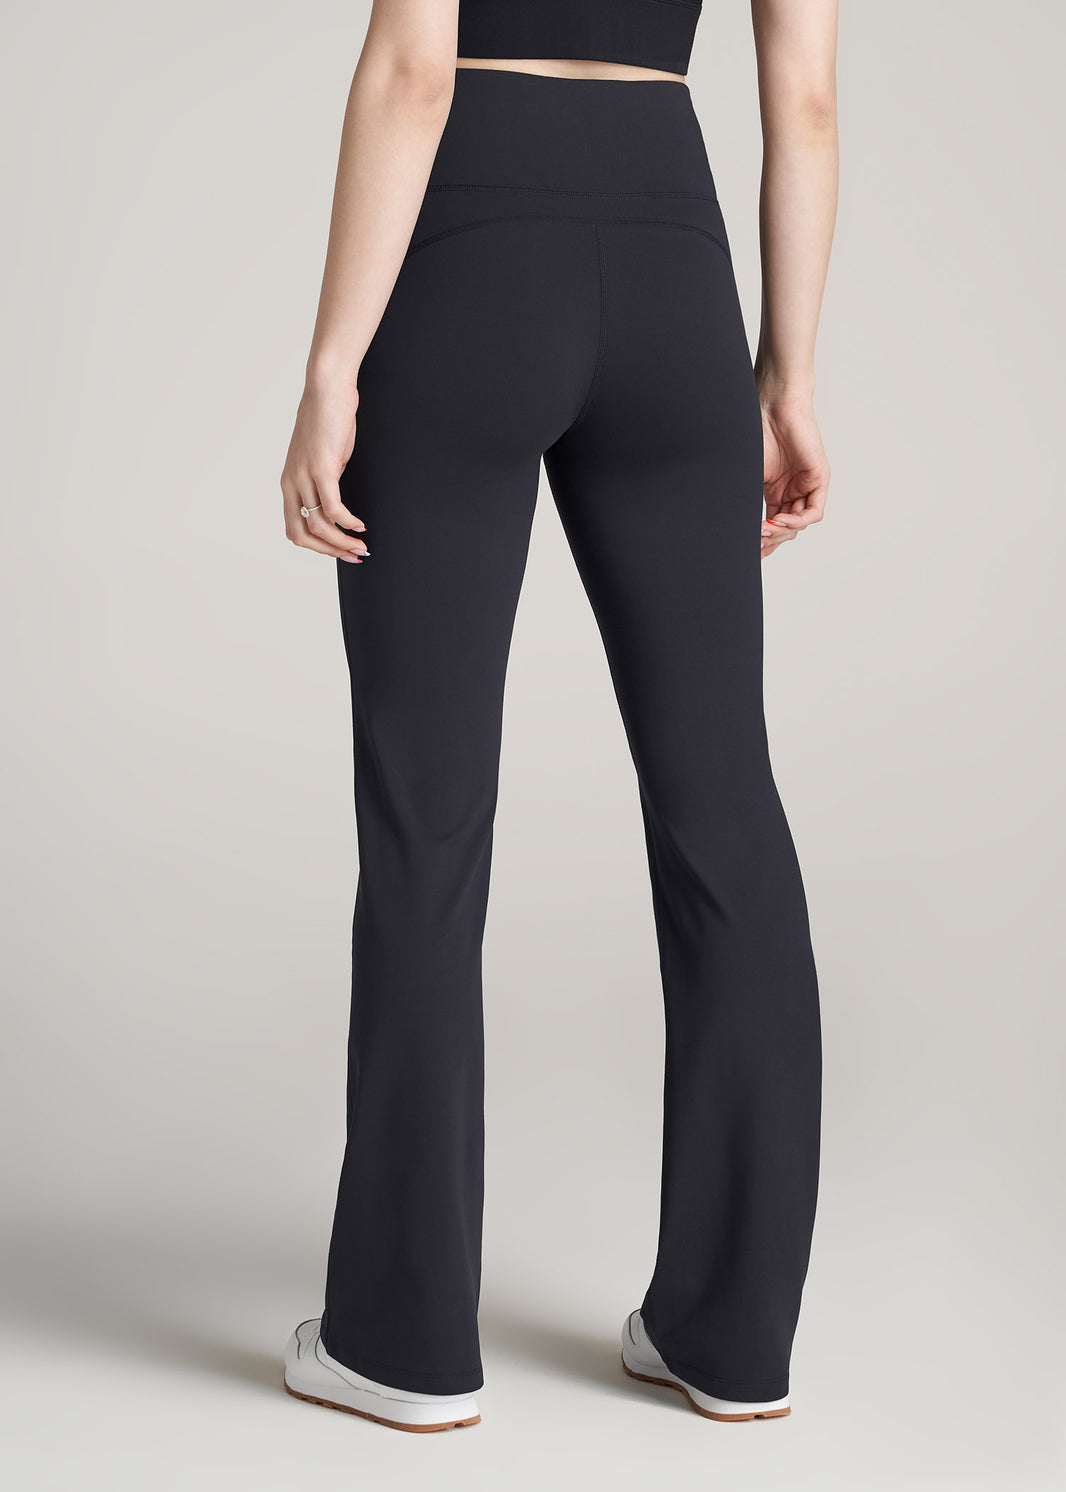 Women's Tall Sweatpants & Athletic Pants | American Tall